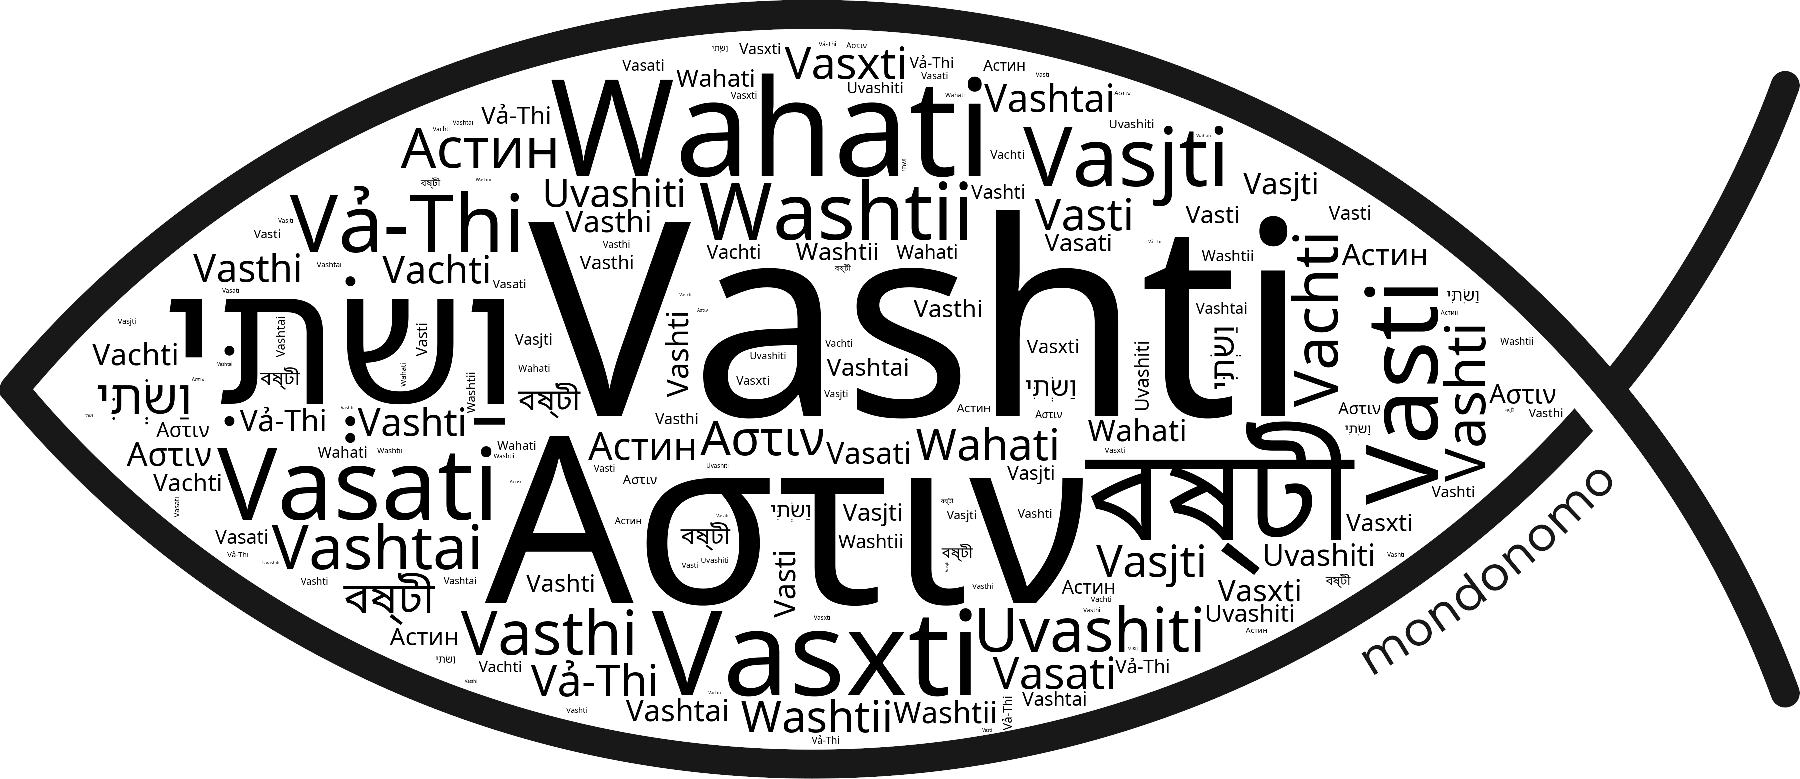 Name Vashti in the world's Bibles